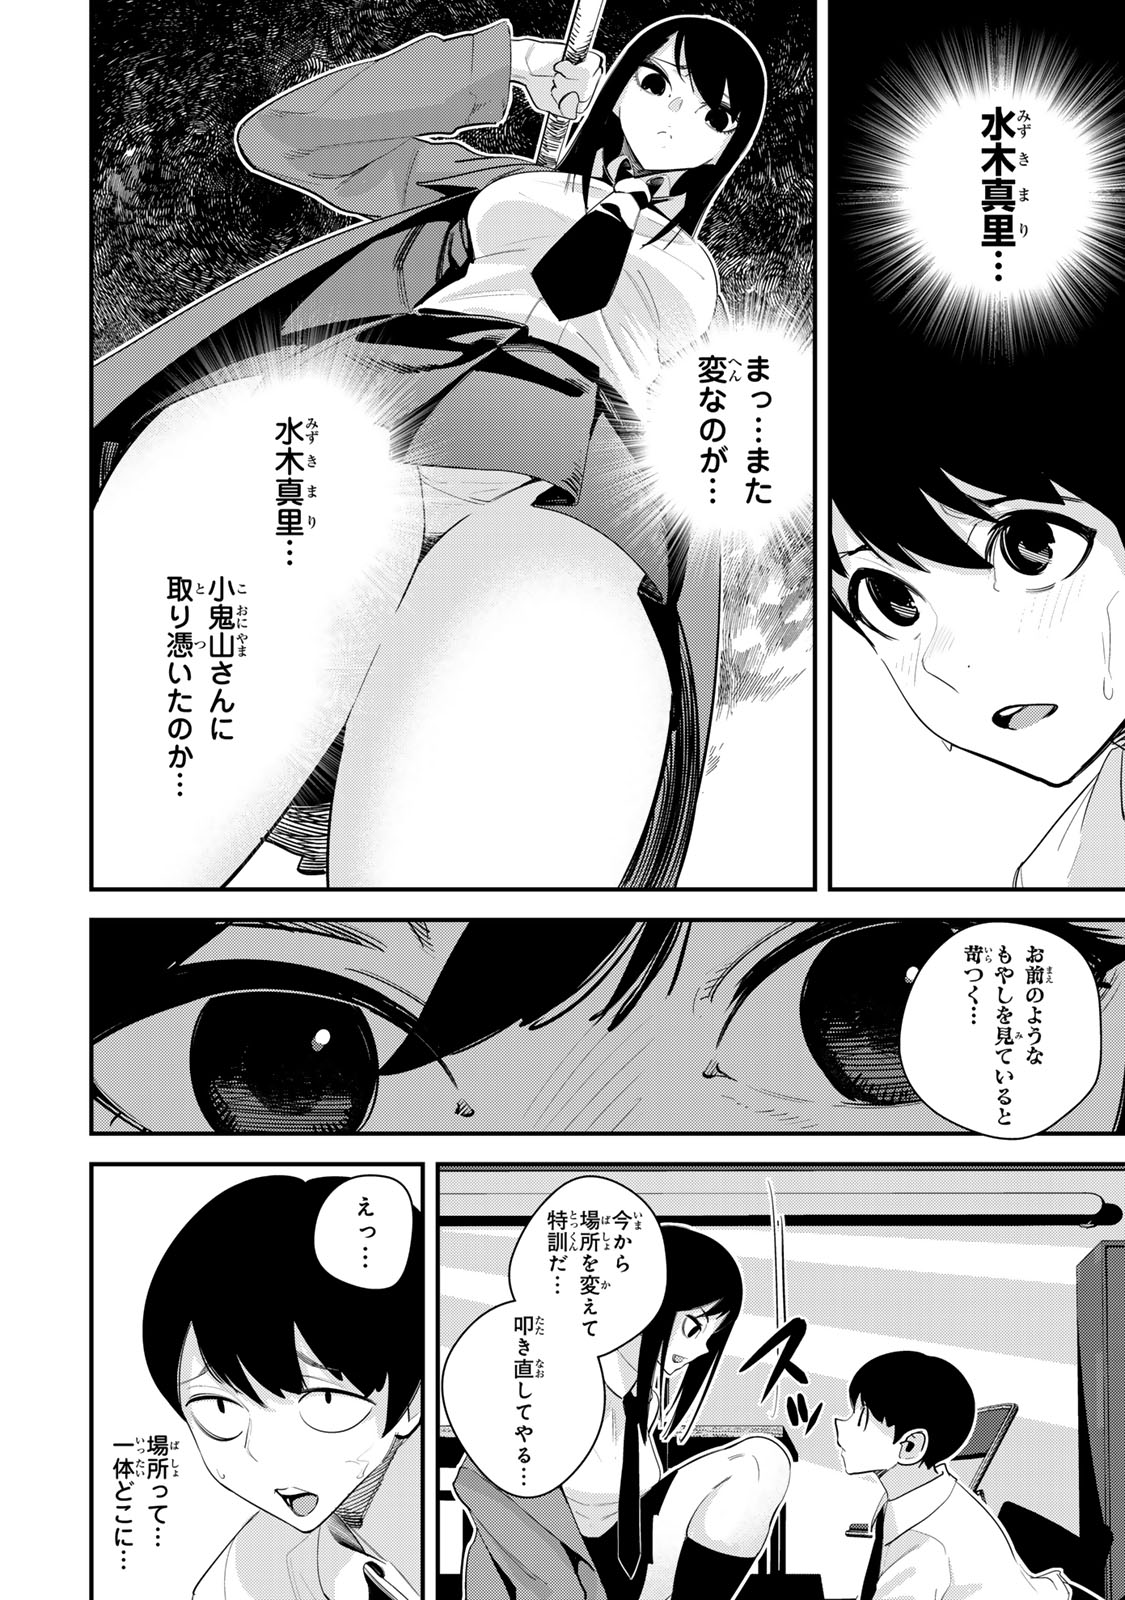 Seima Toubatsu Deneidan - Chapter 2 - Page 8